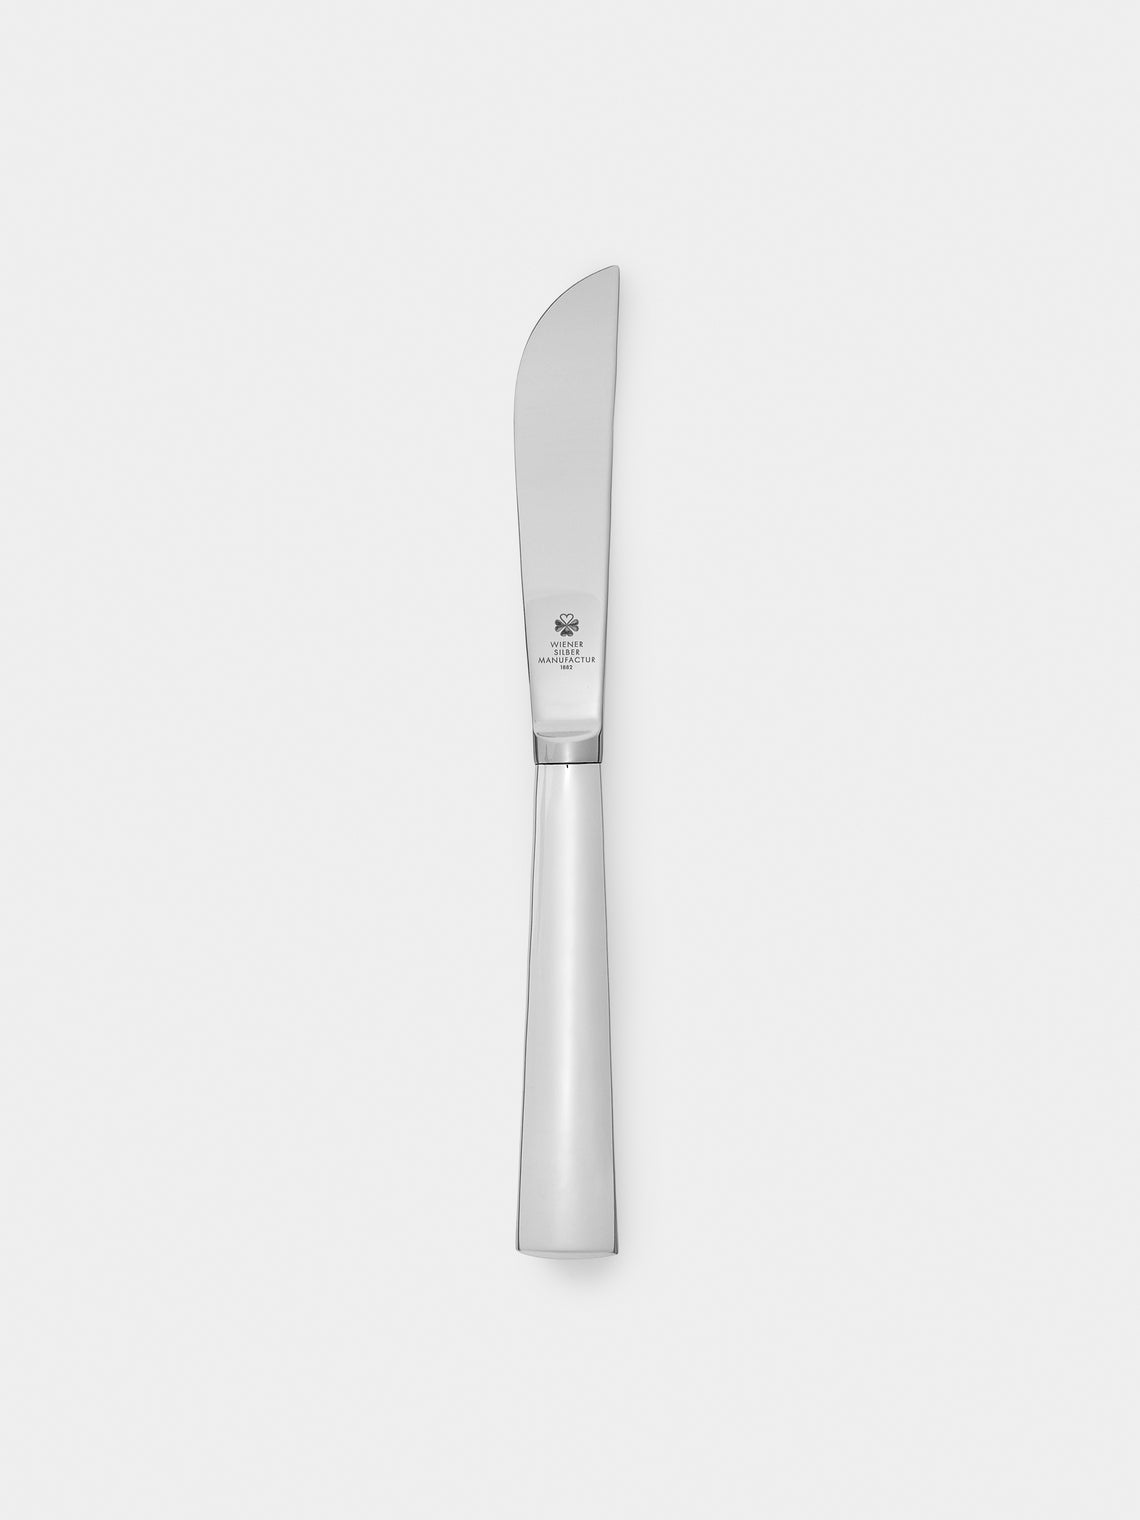 Wiener Silber Manufactur - Josef Hoffmann 135 Silver-Plated Fruit Knife -  - ABASK - 